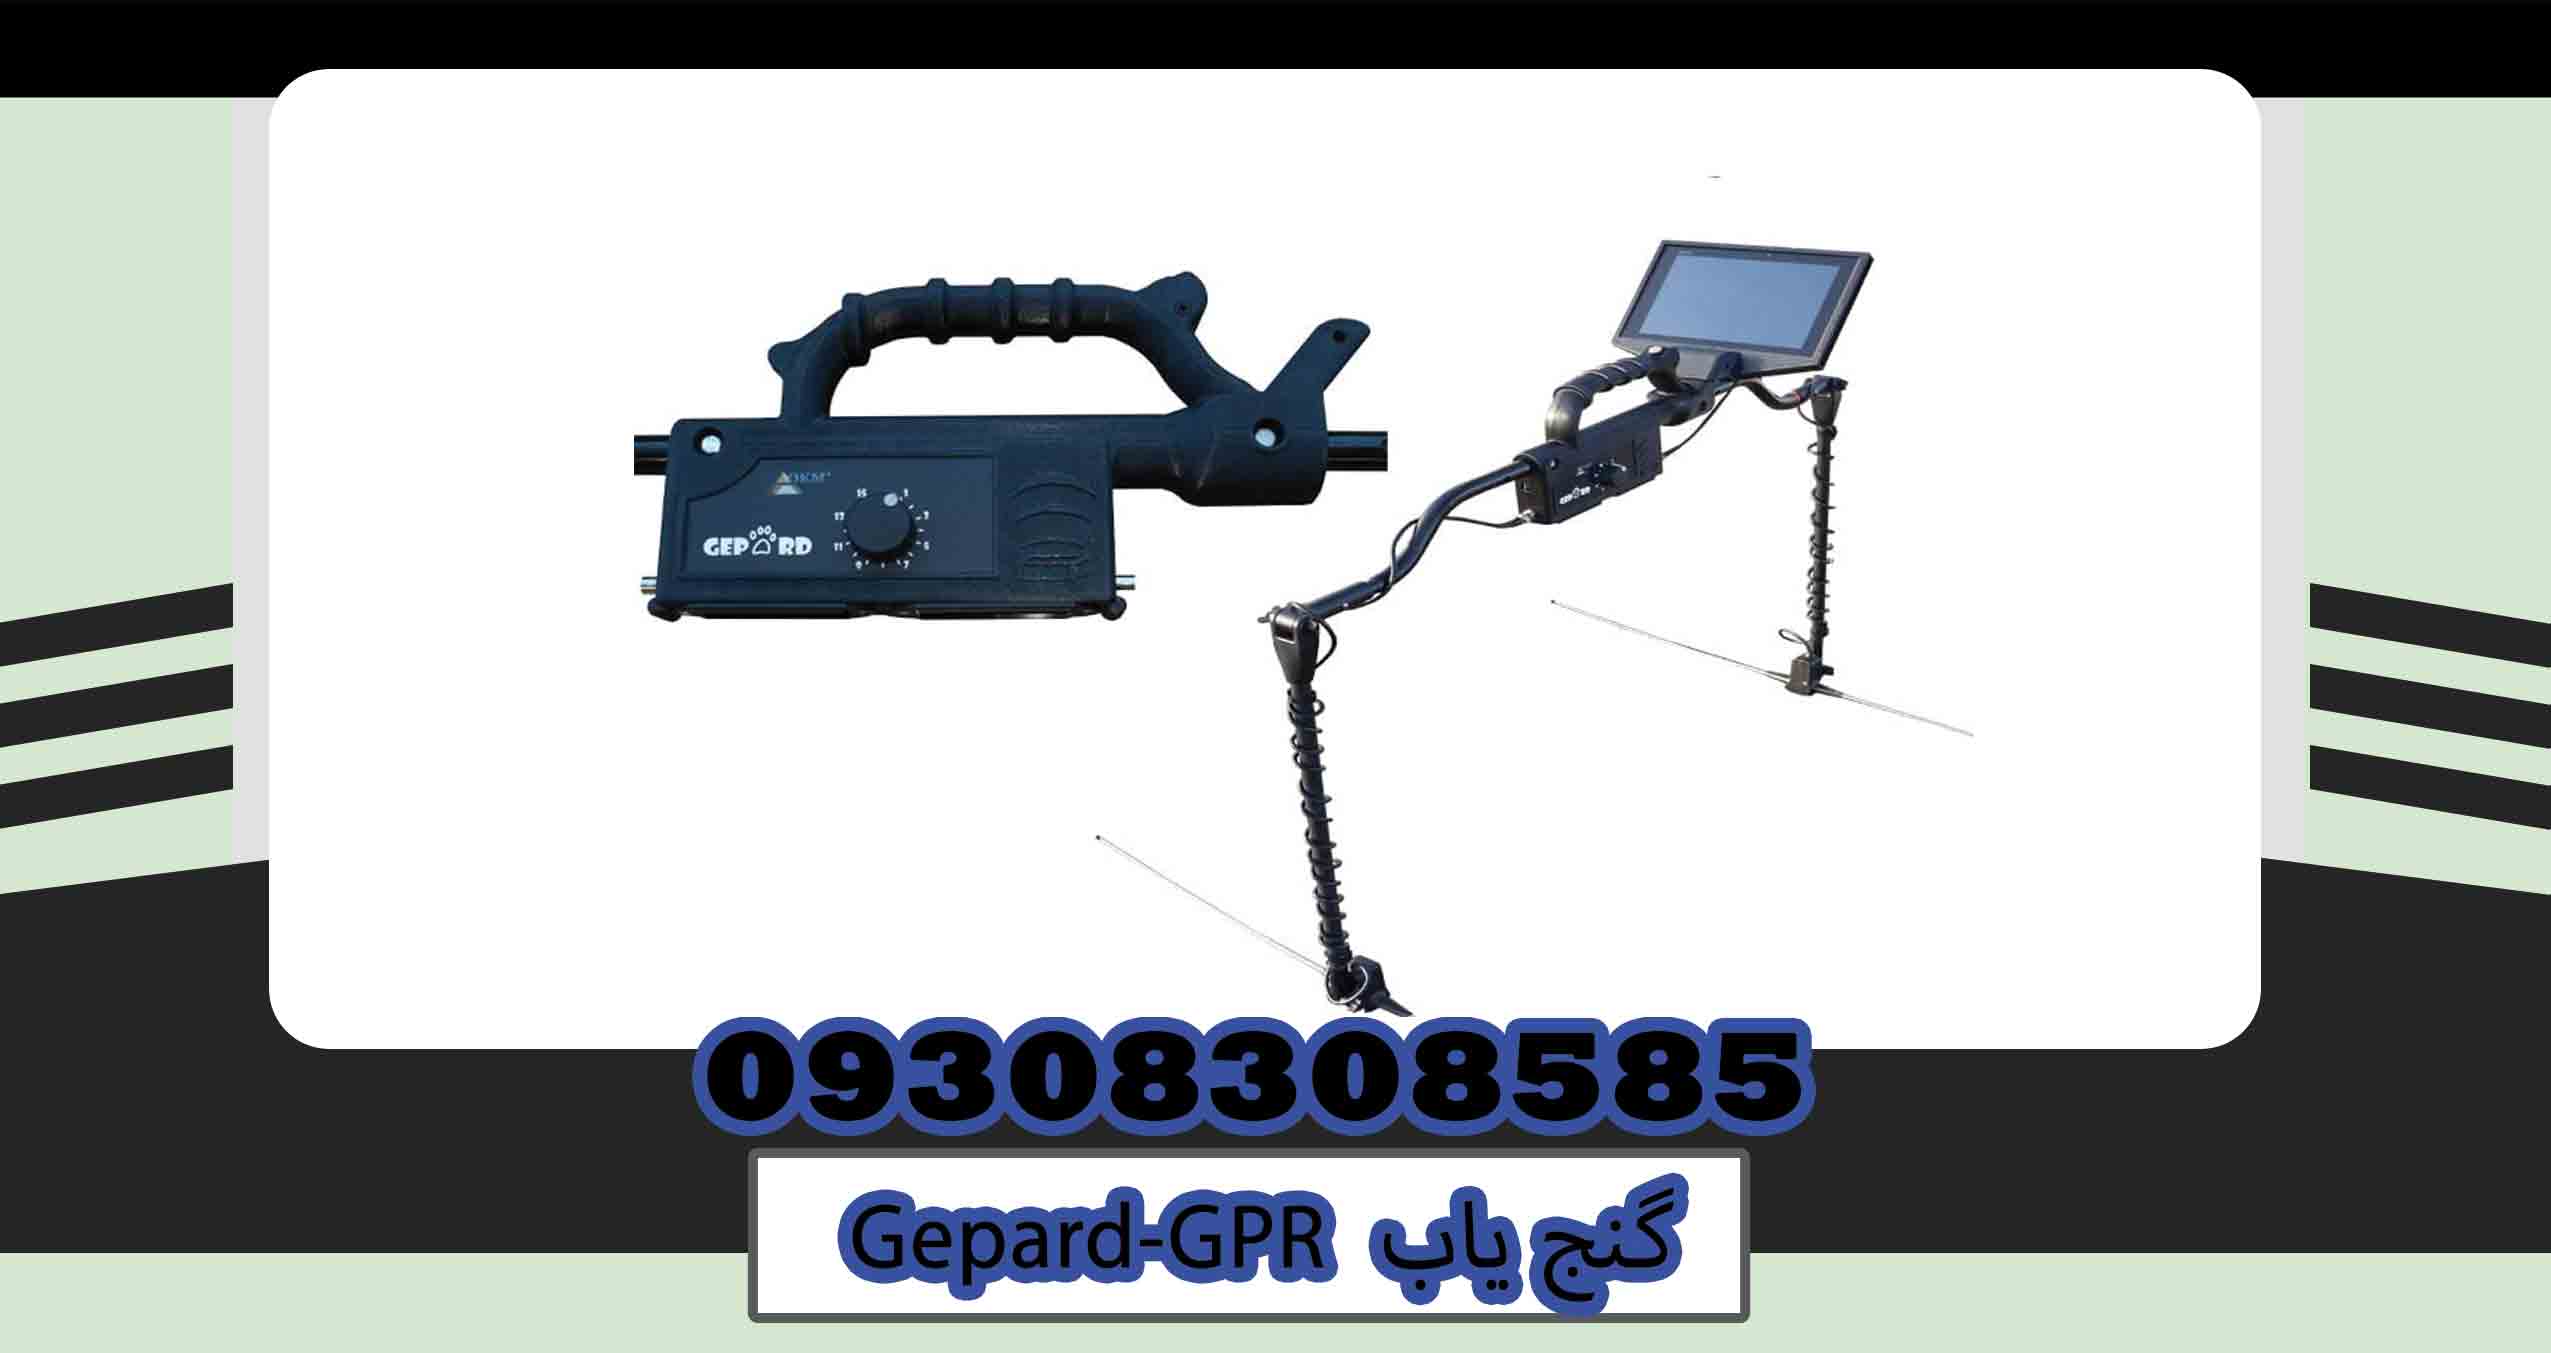 Gepard-GPR